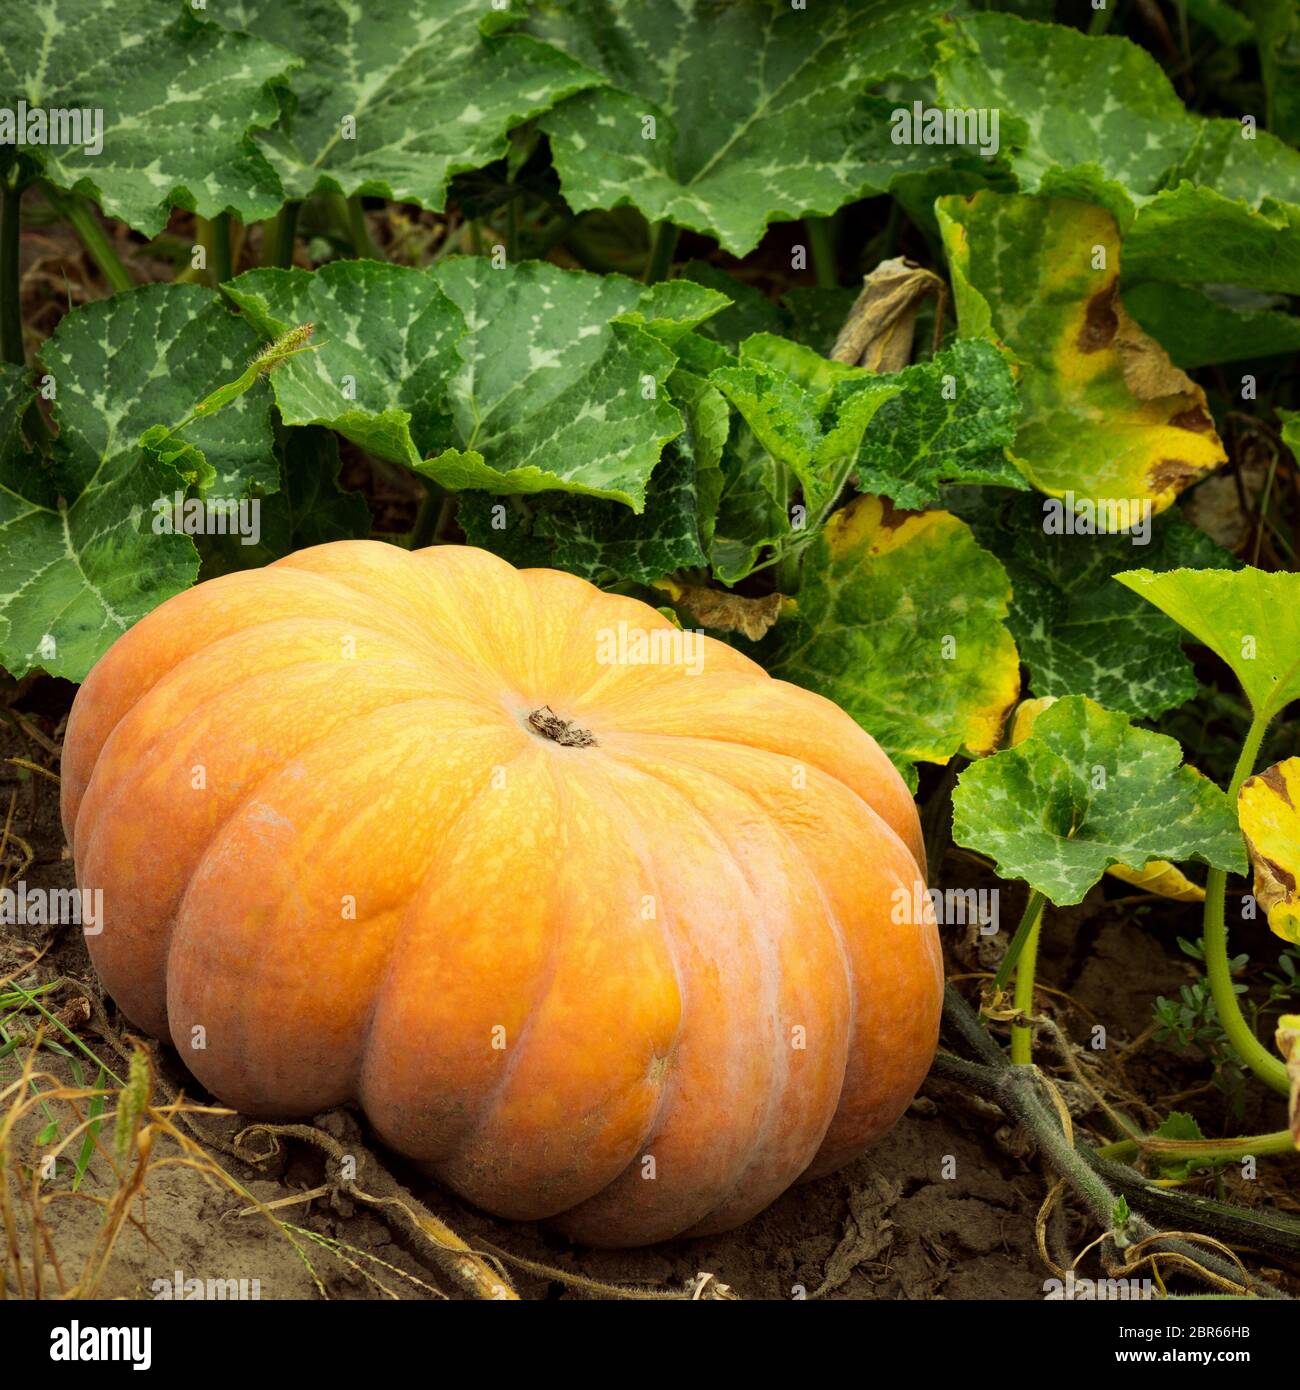 Big orange round pumpkin with green leaves is in garden. Stock Photo